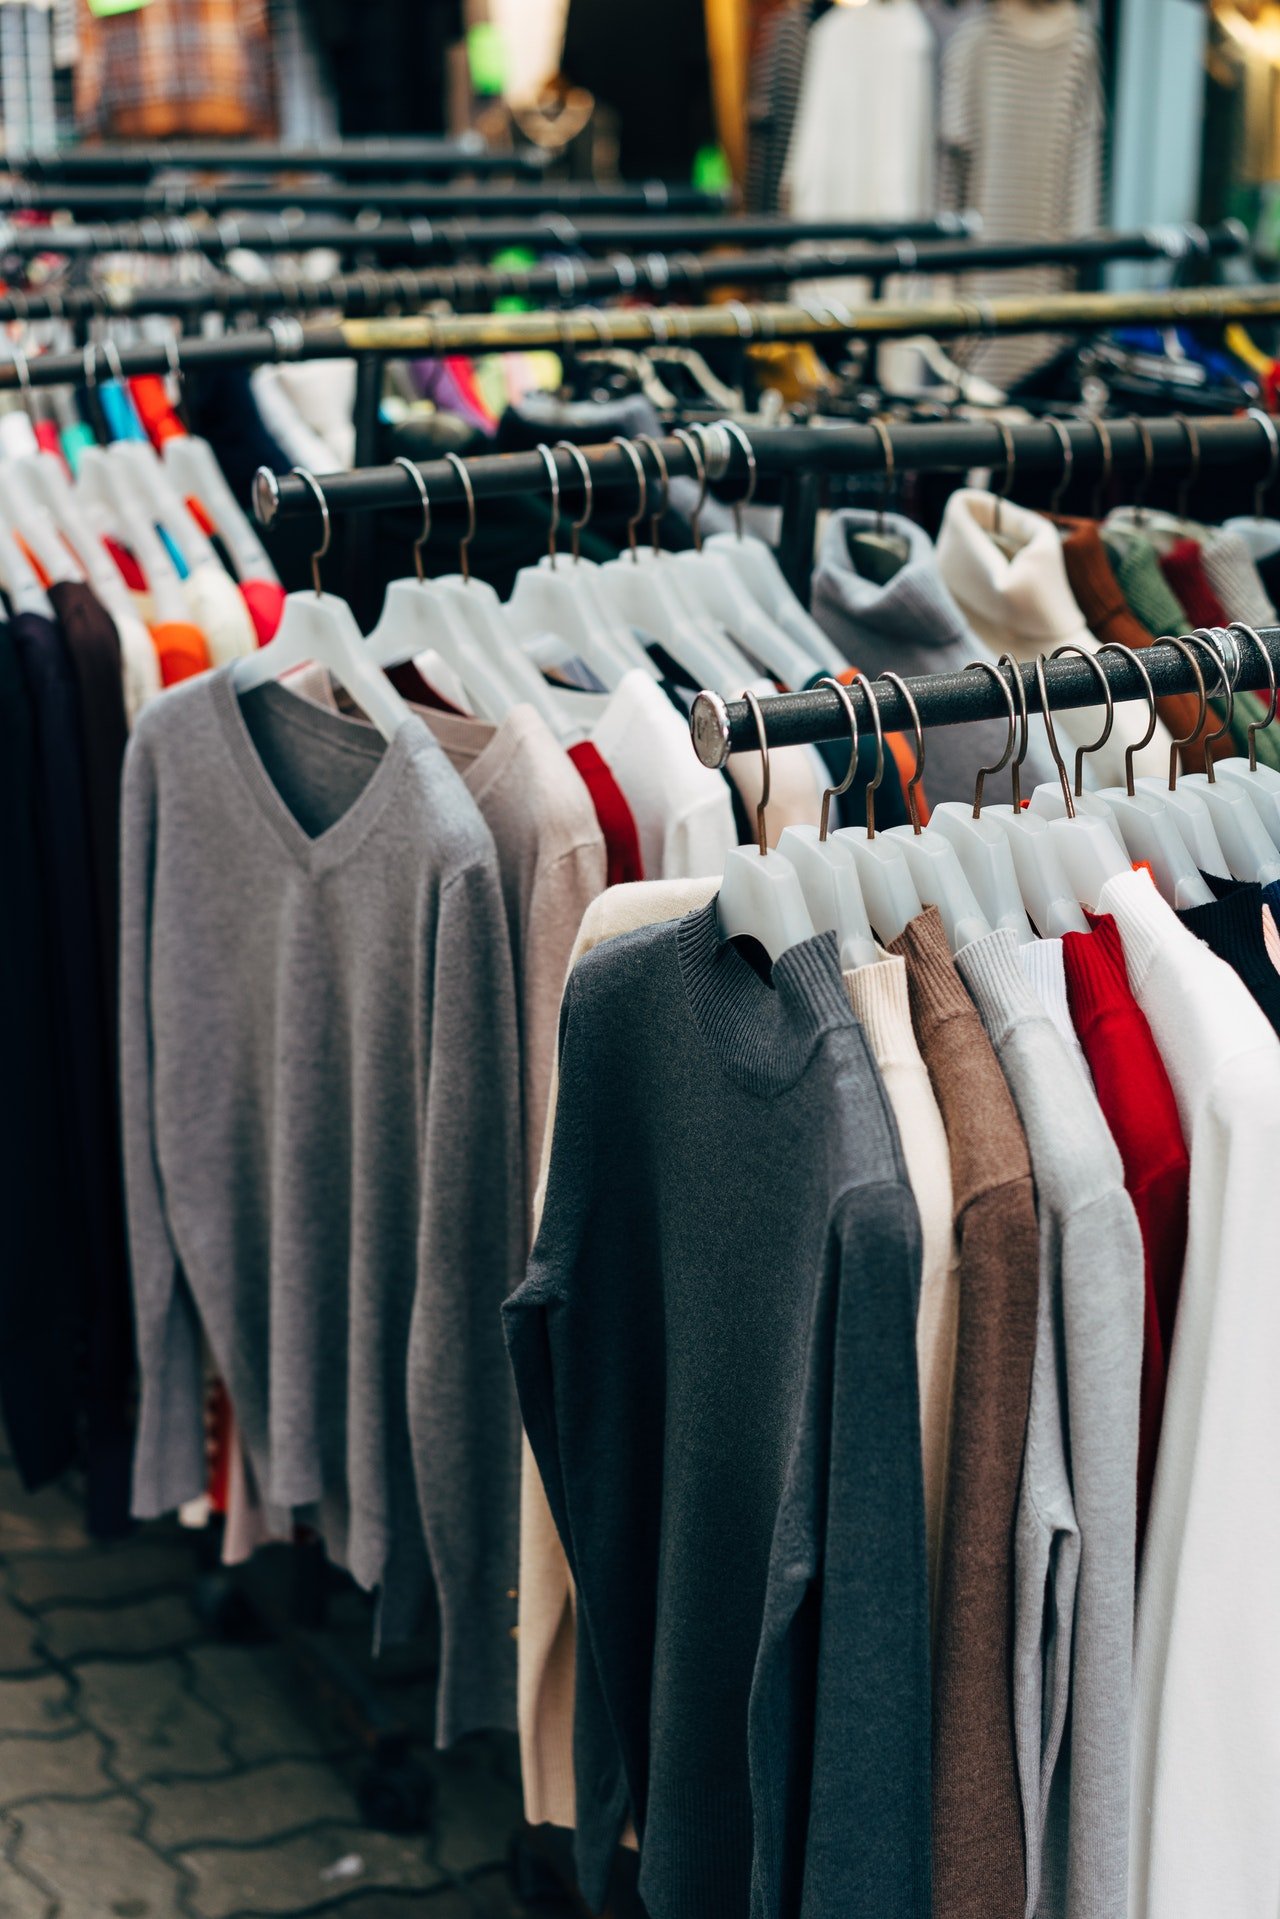 Sweaters hanging on clothing racks | Source: Pexels